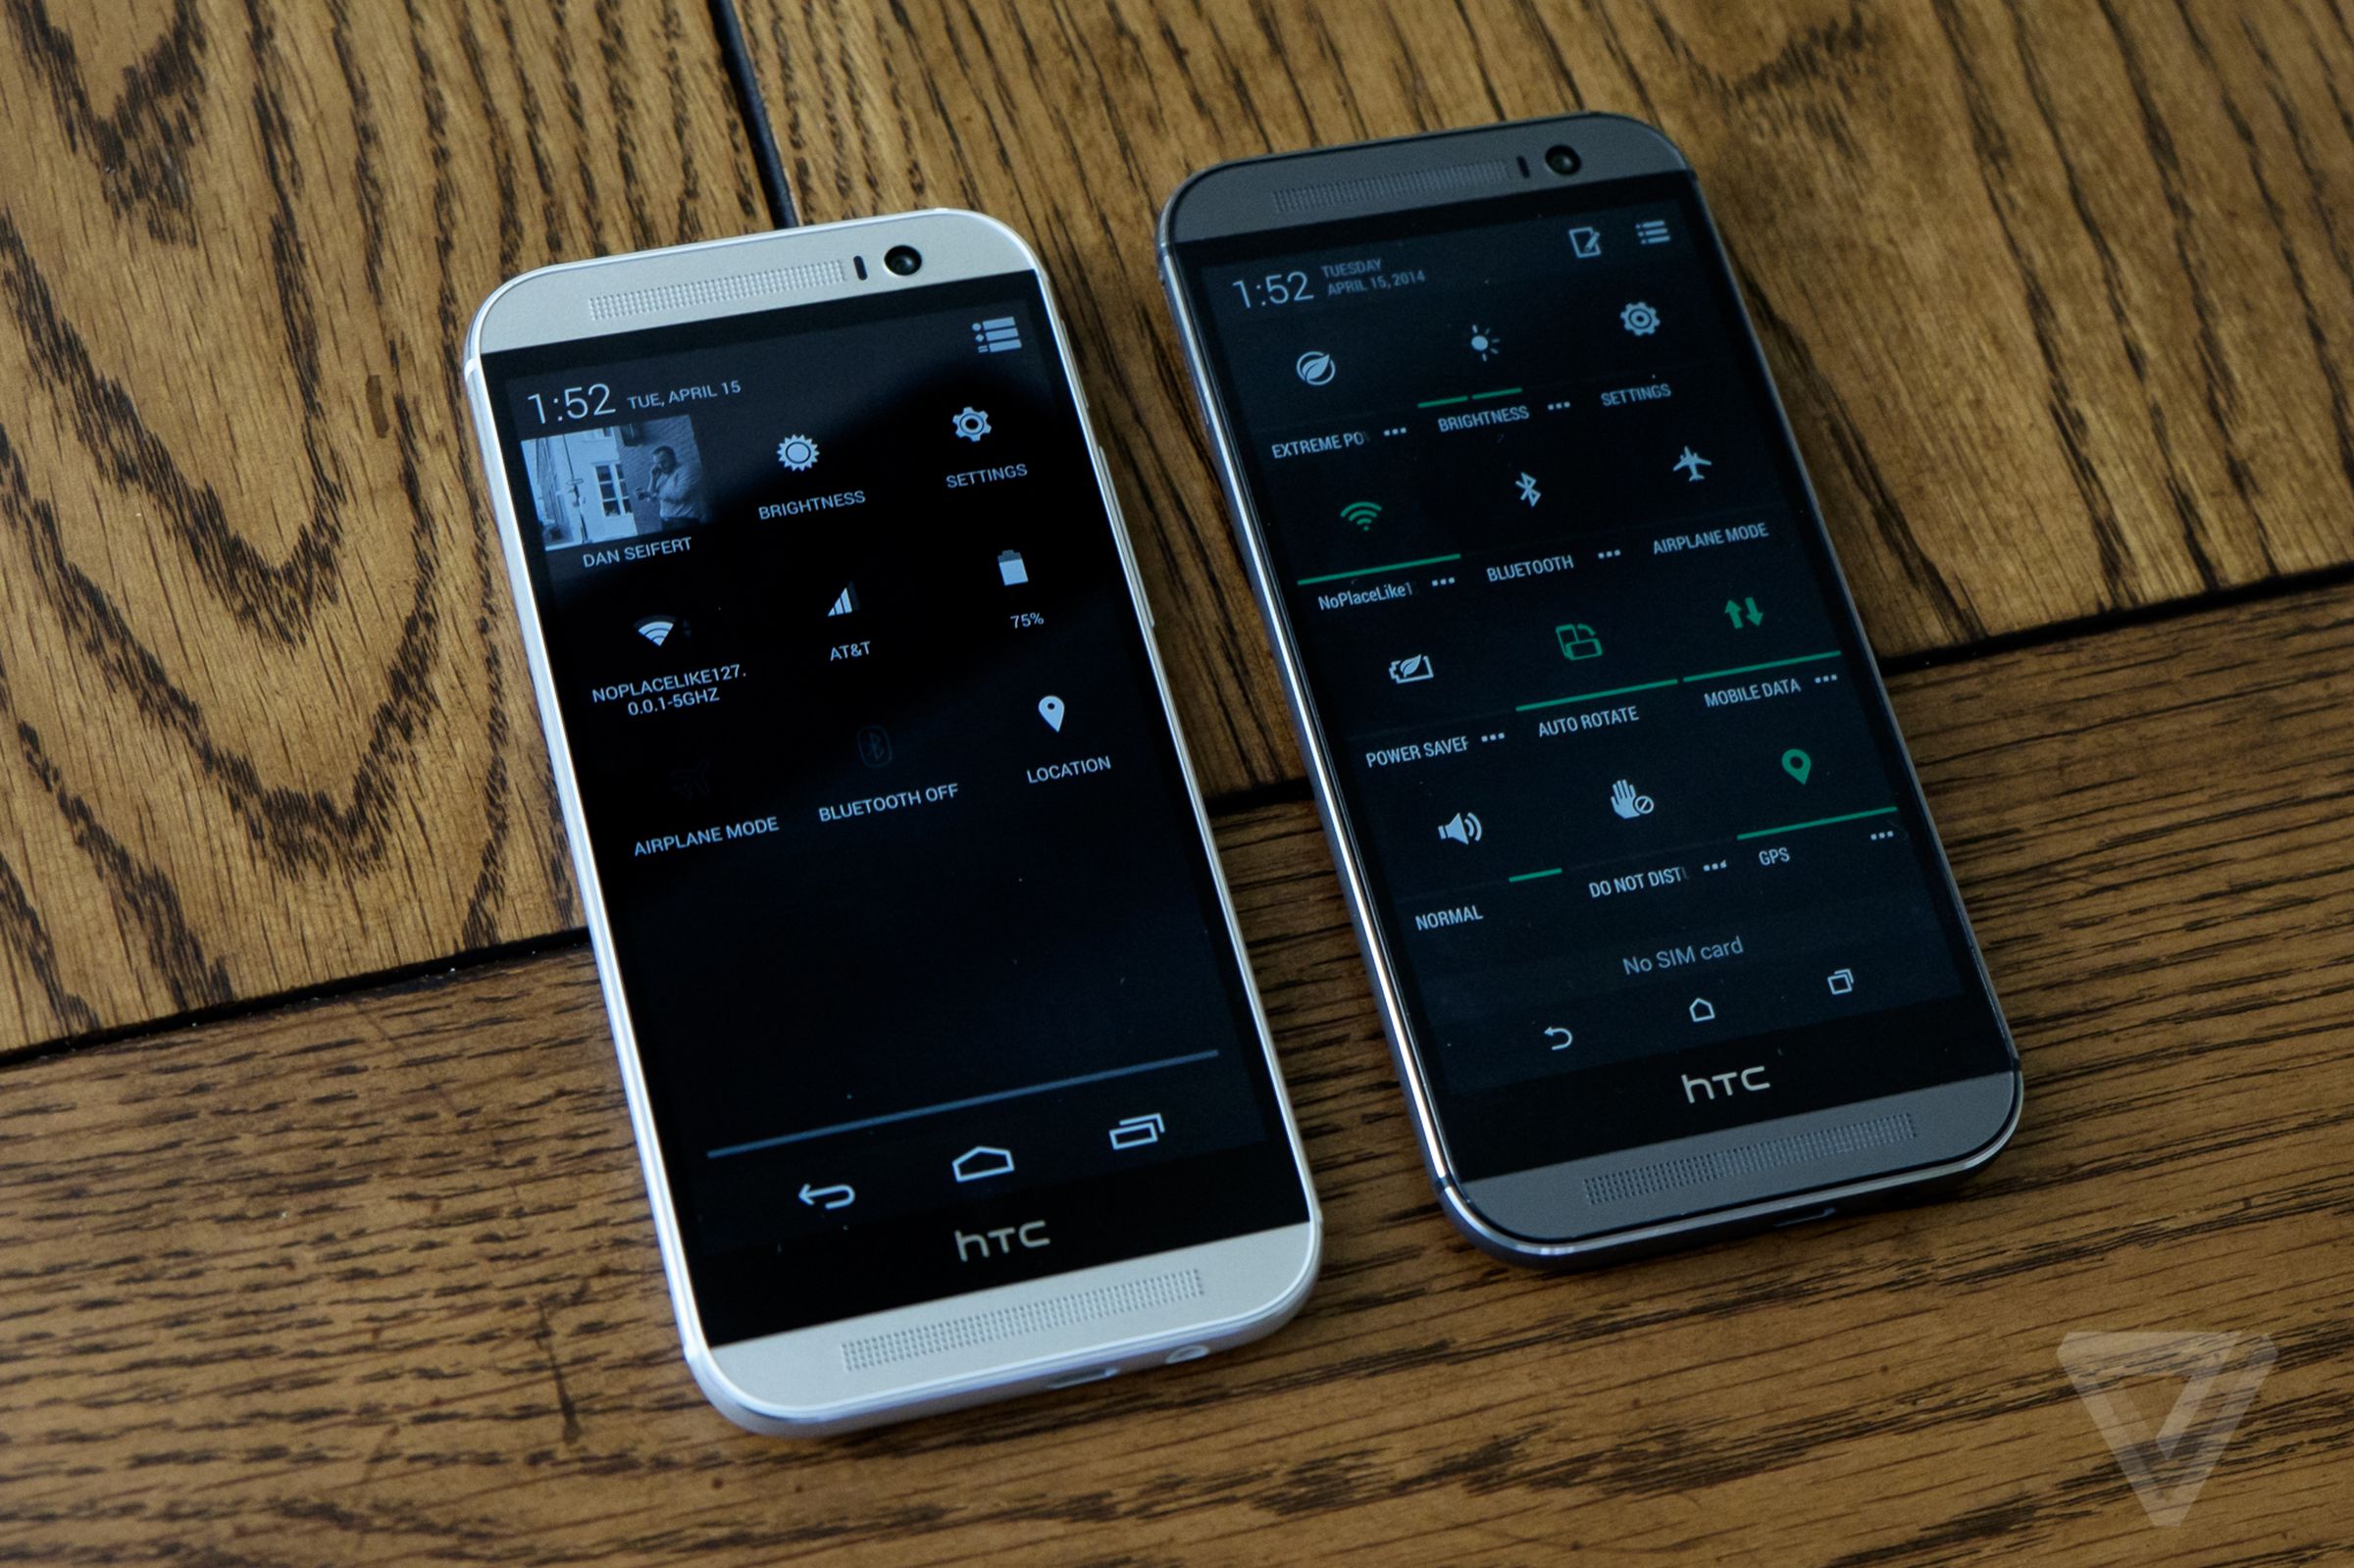 HTC One Google Play Edition photos